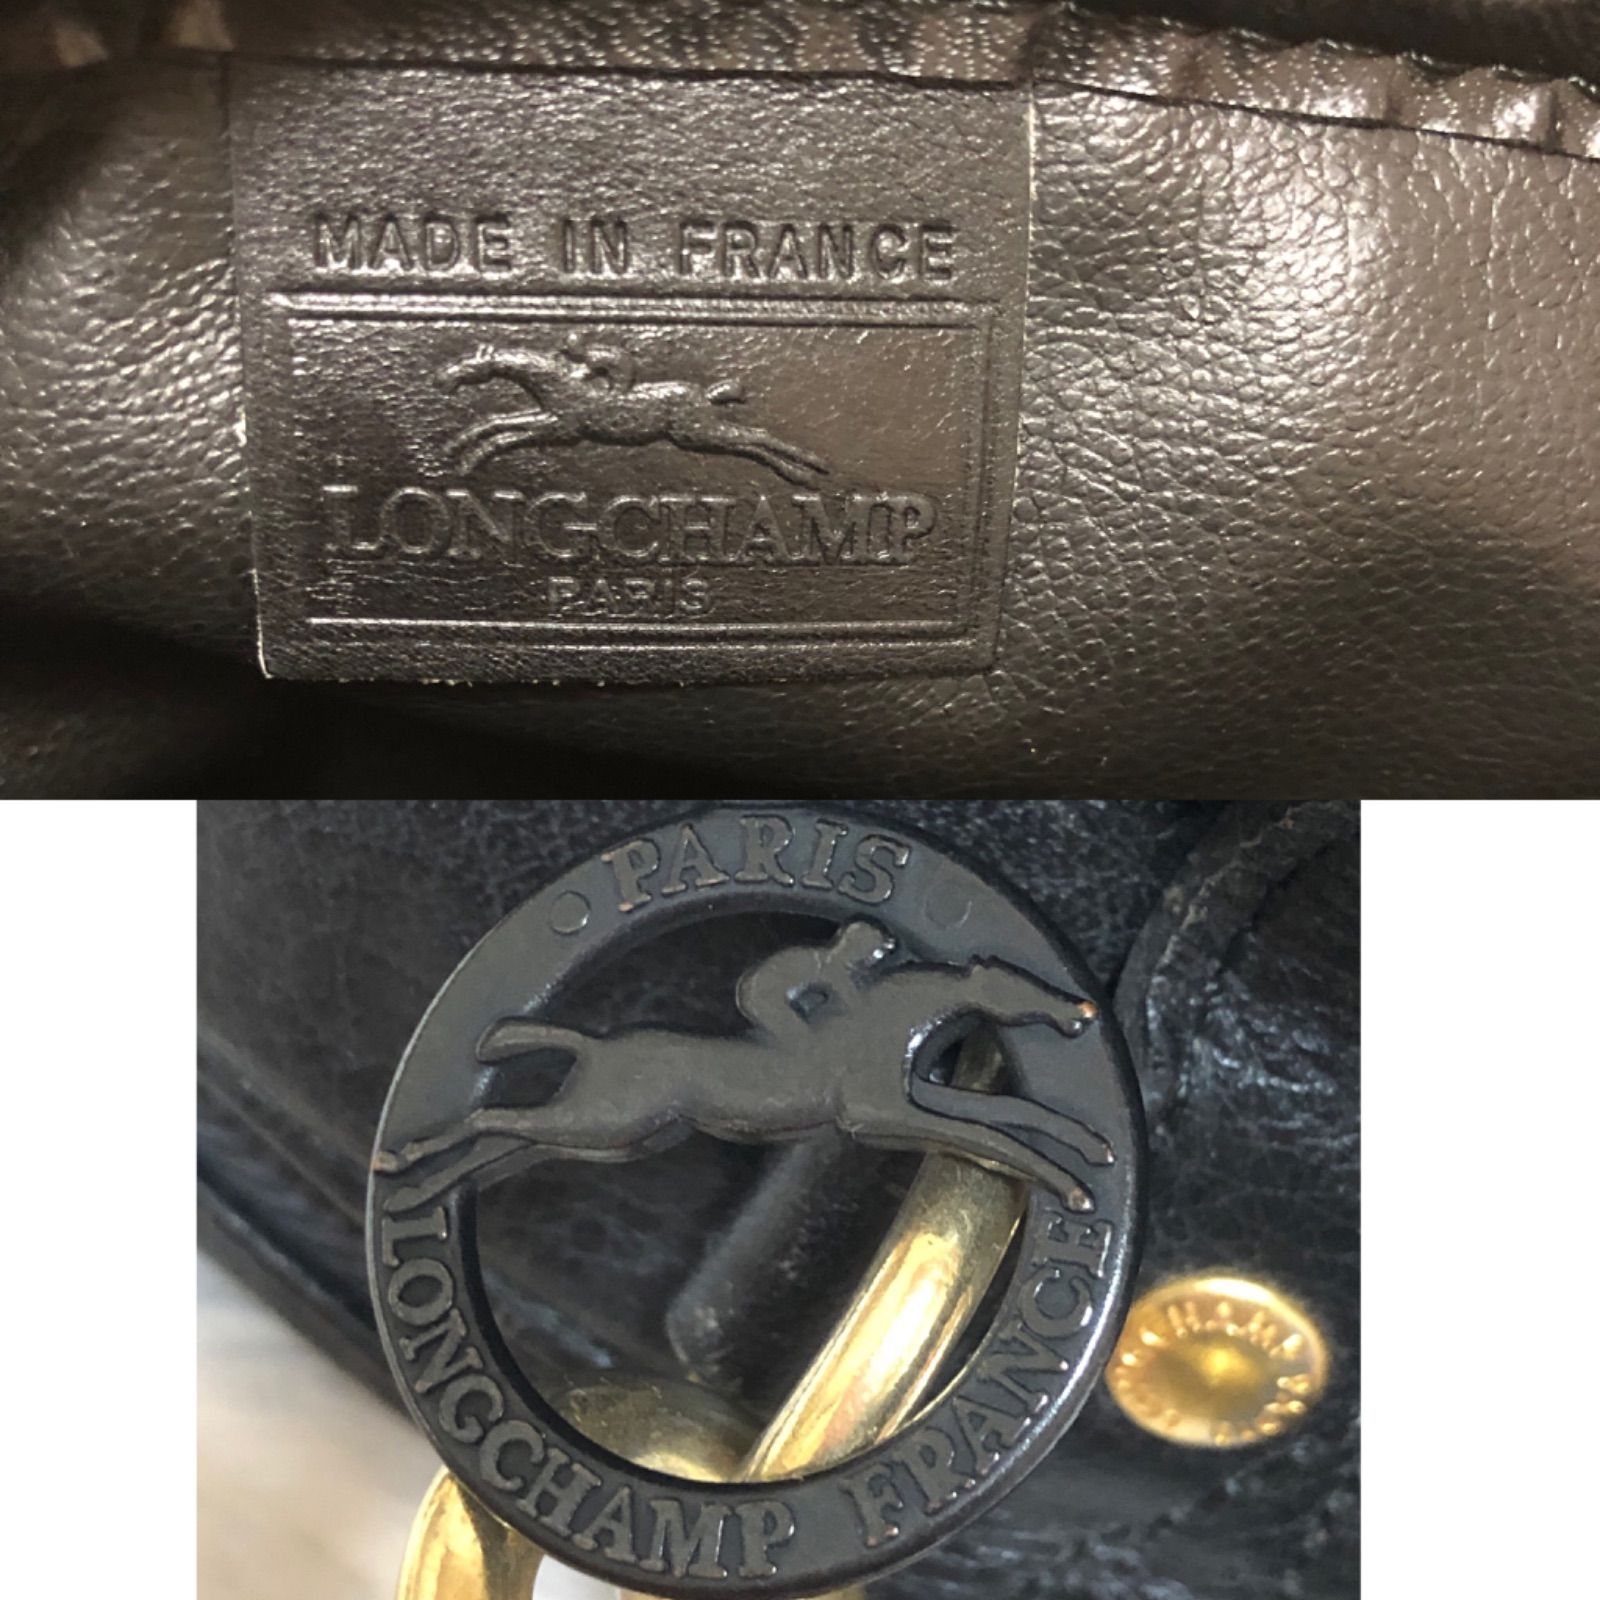 Longchamp ロンシャン オールレザー ロゴ型押し ハンド ショルダー 